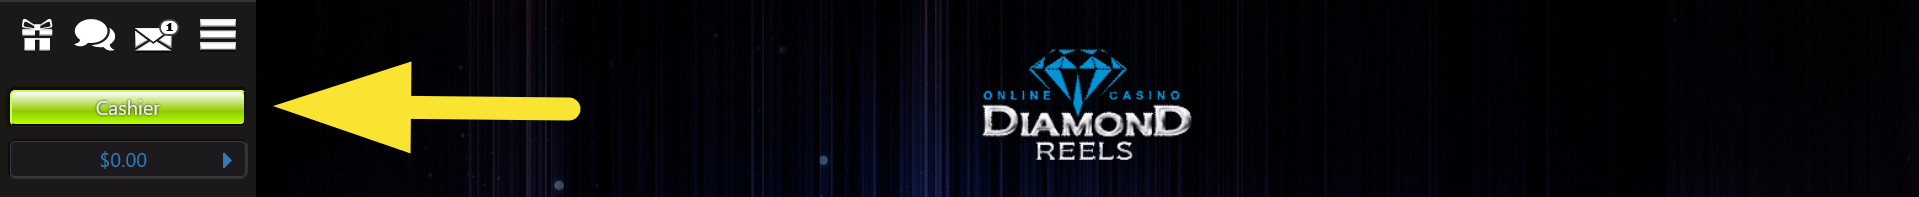 Diamond reels no deposit bonus december 2020